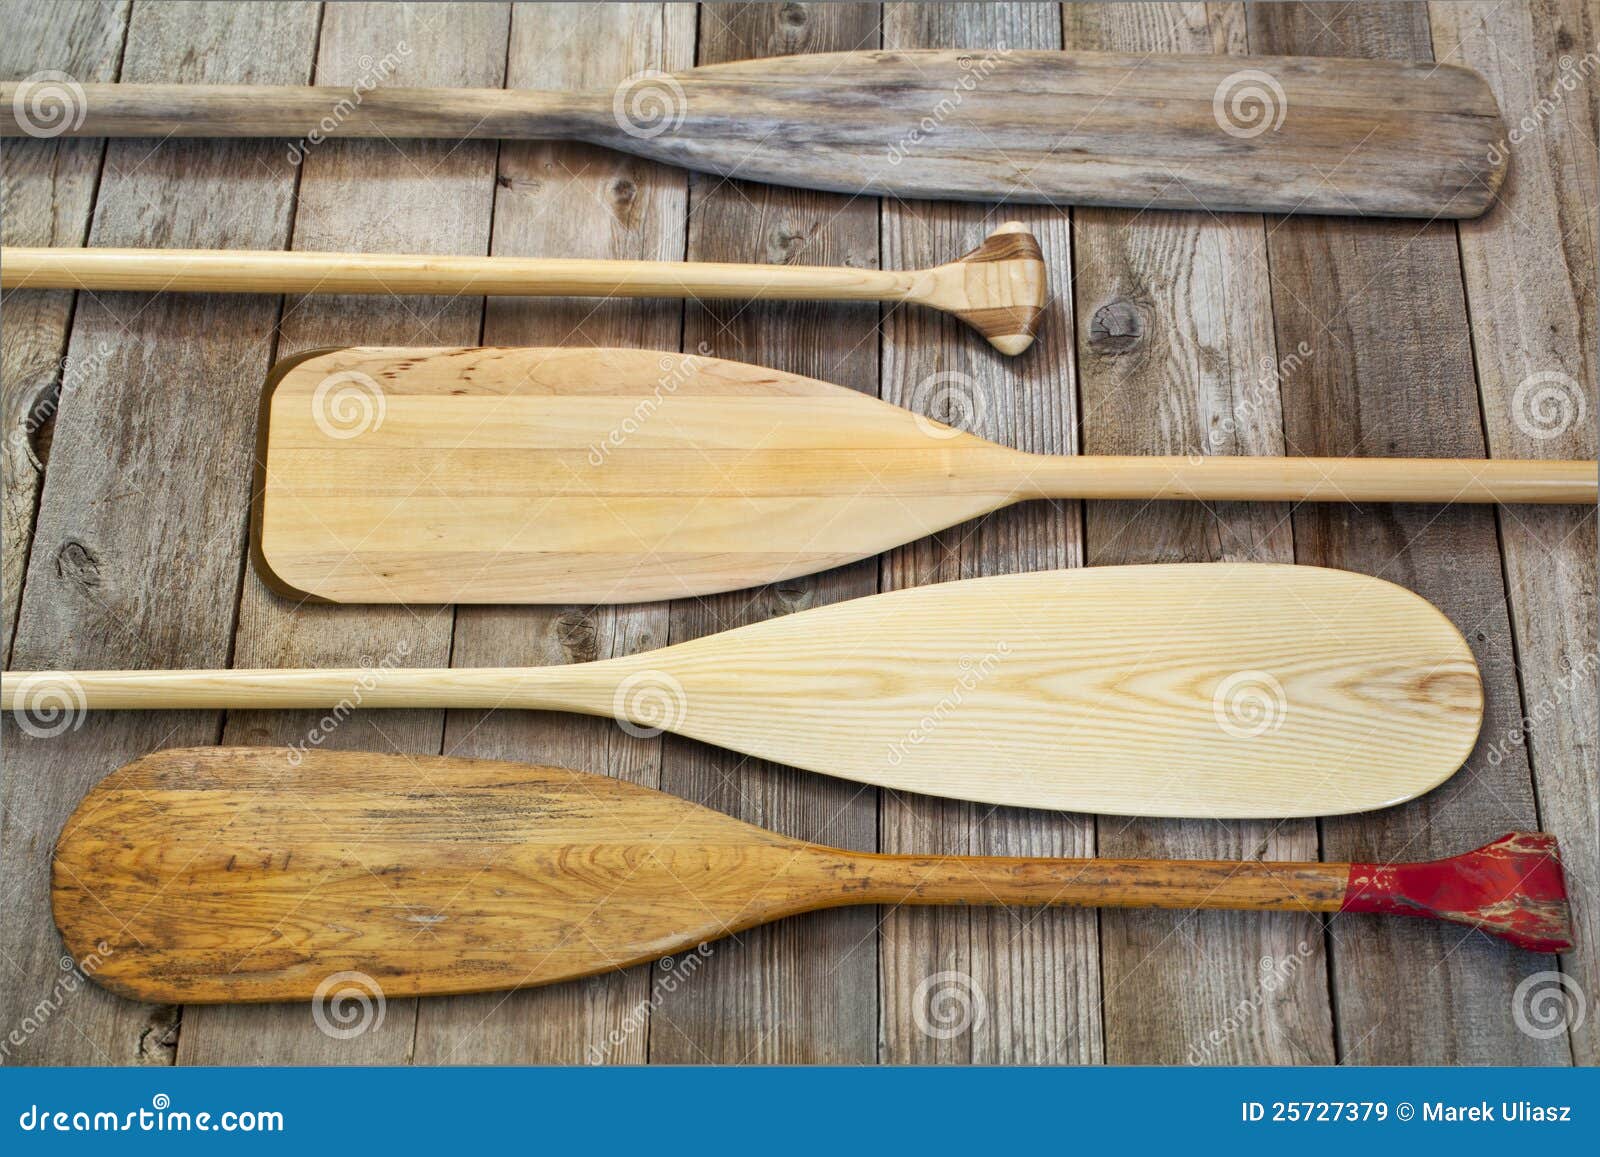 wooden canoe paddles royalty free stock images - image